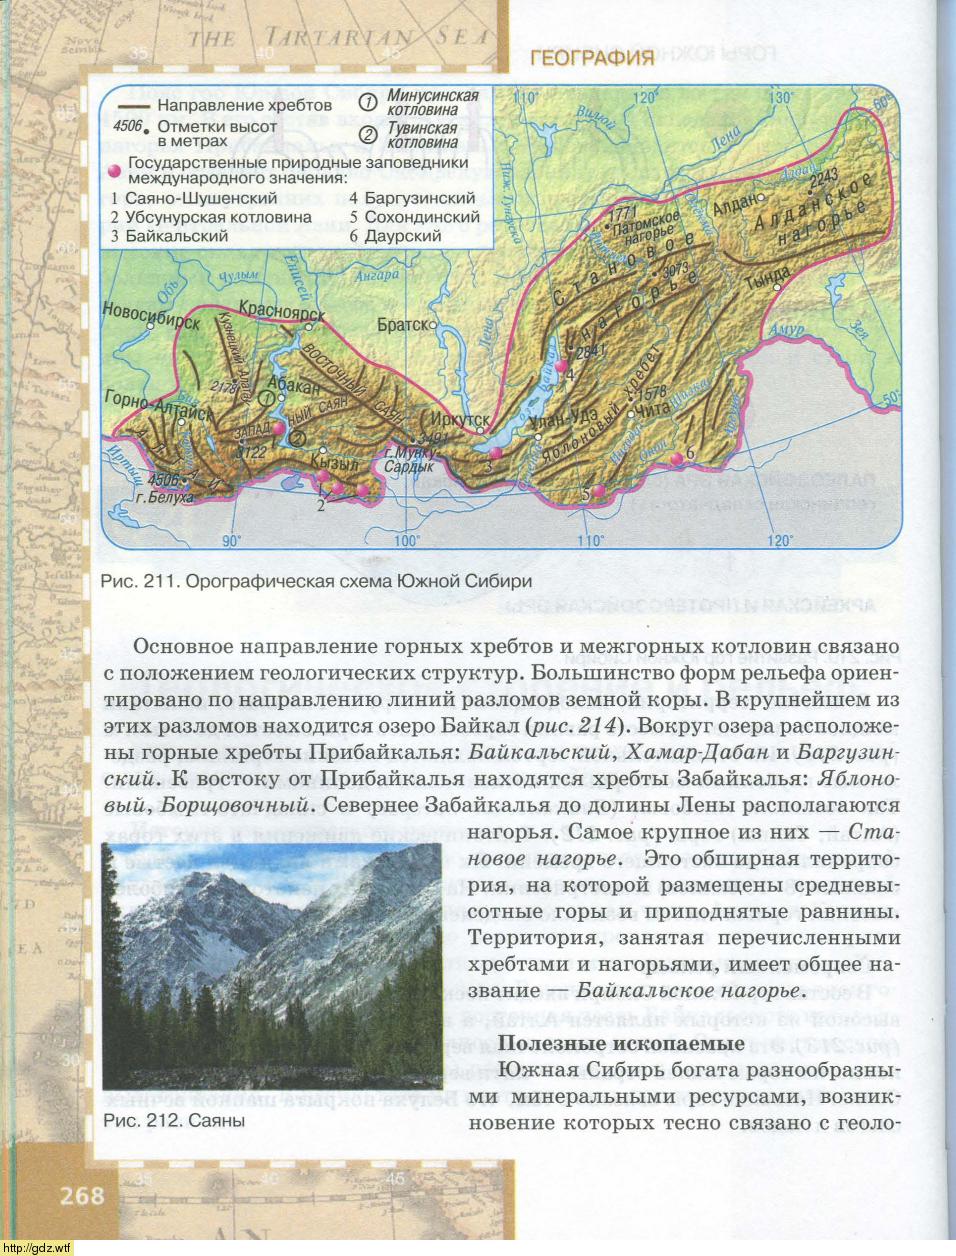 Котловины гор Южной Сибири